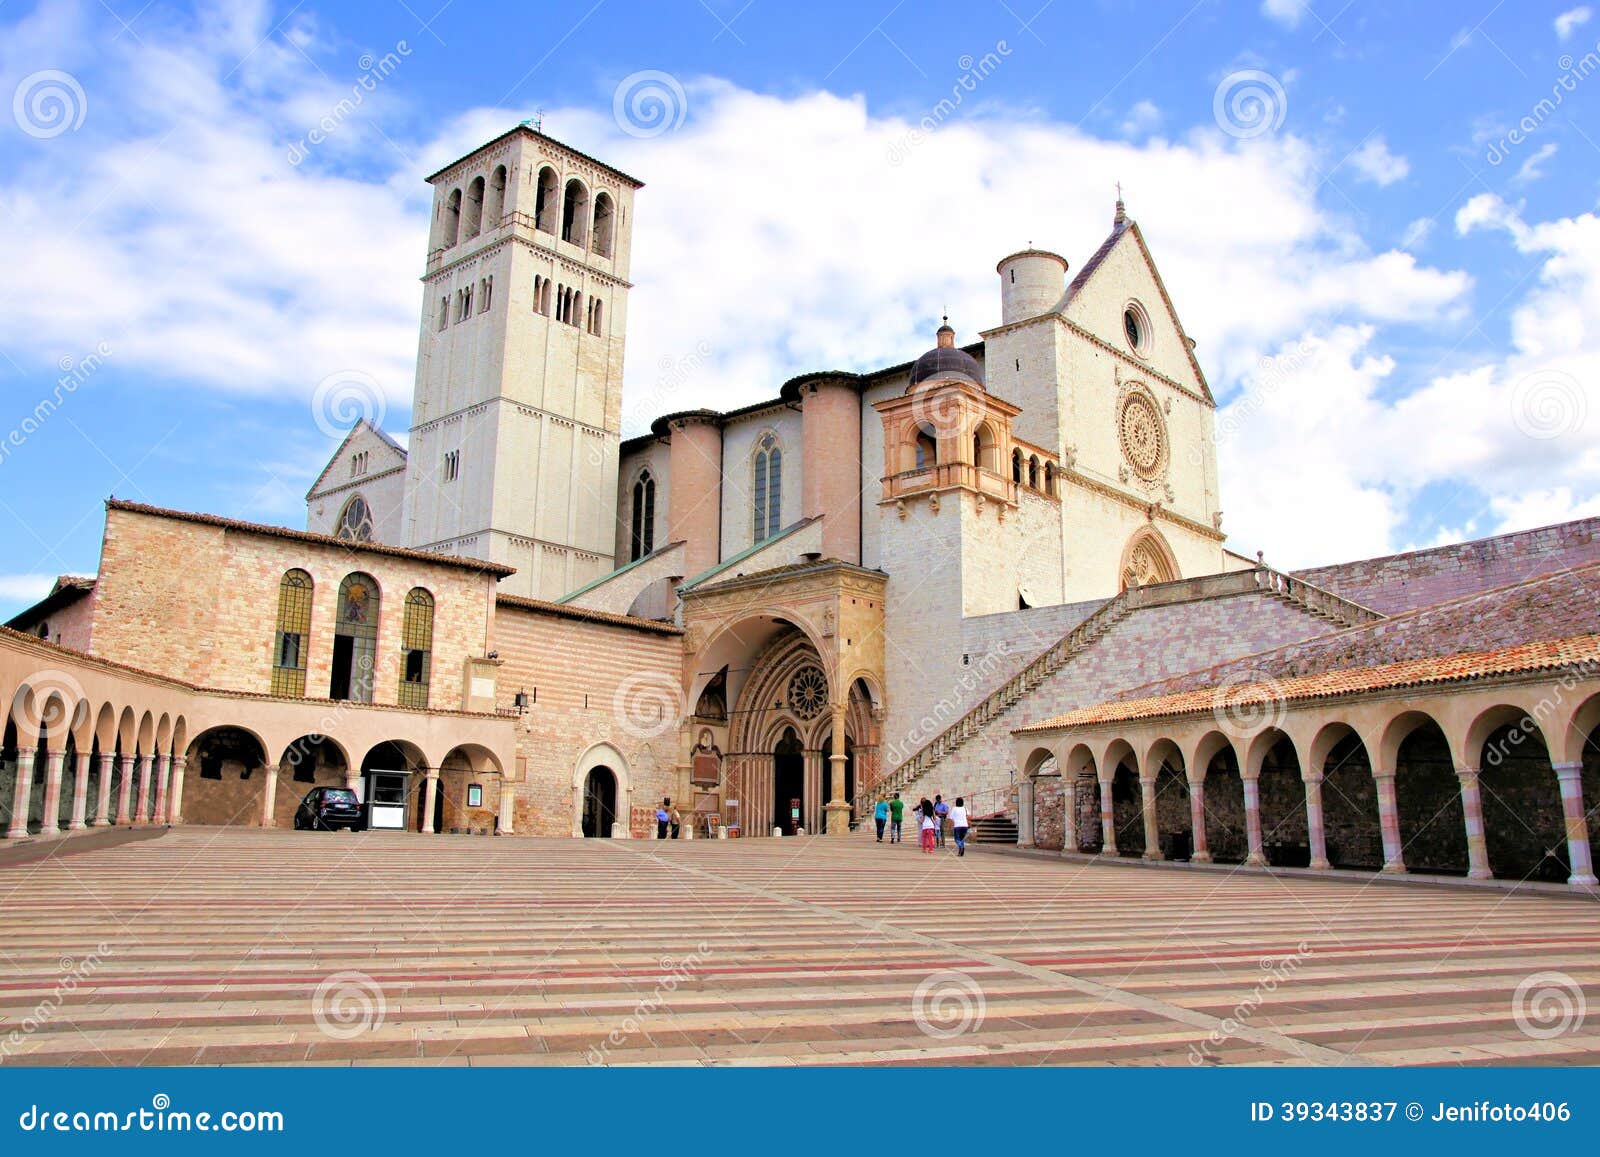 basilica of st francis, assisi